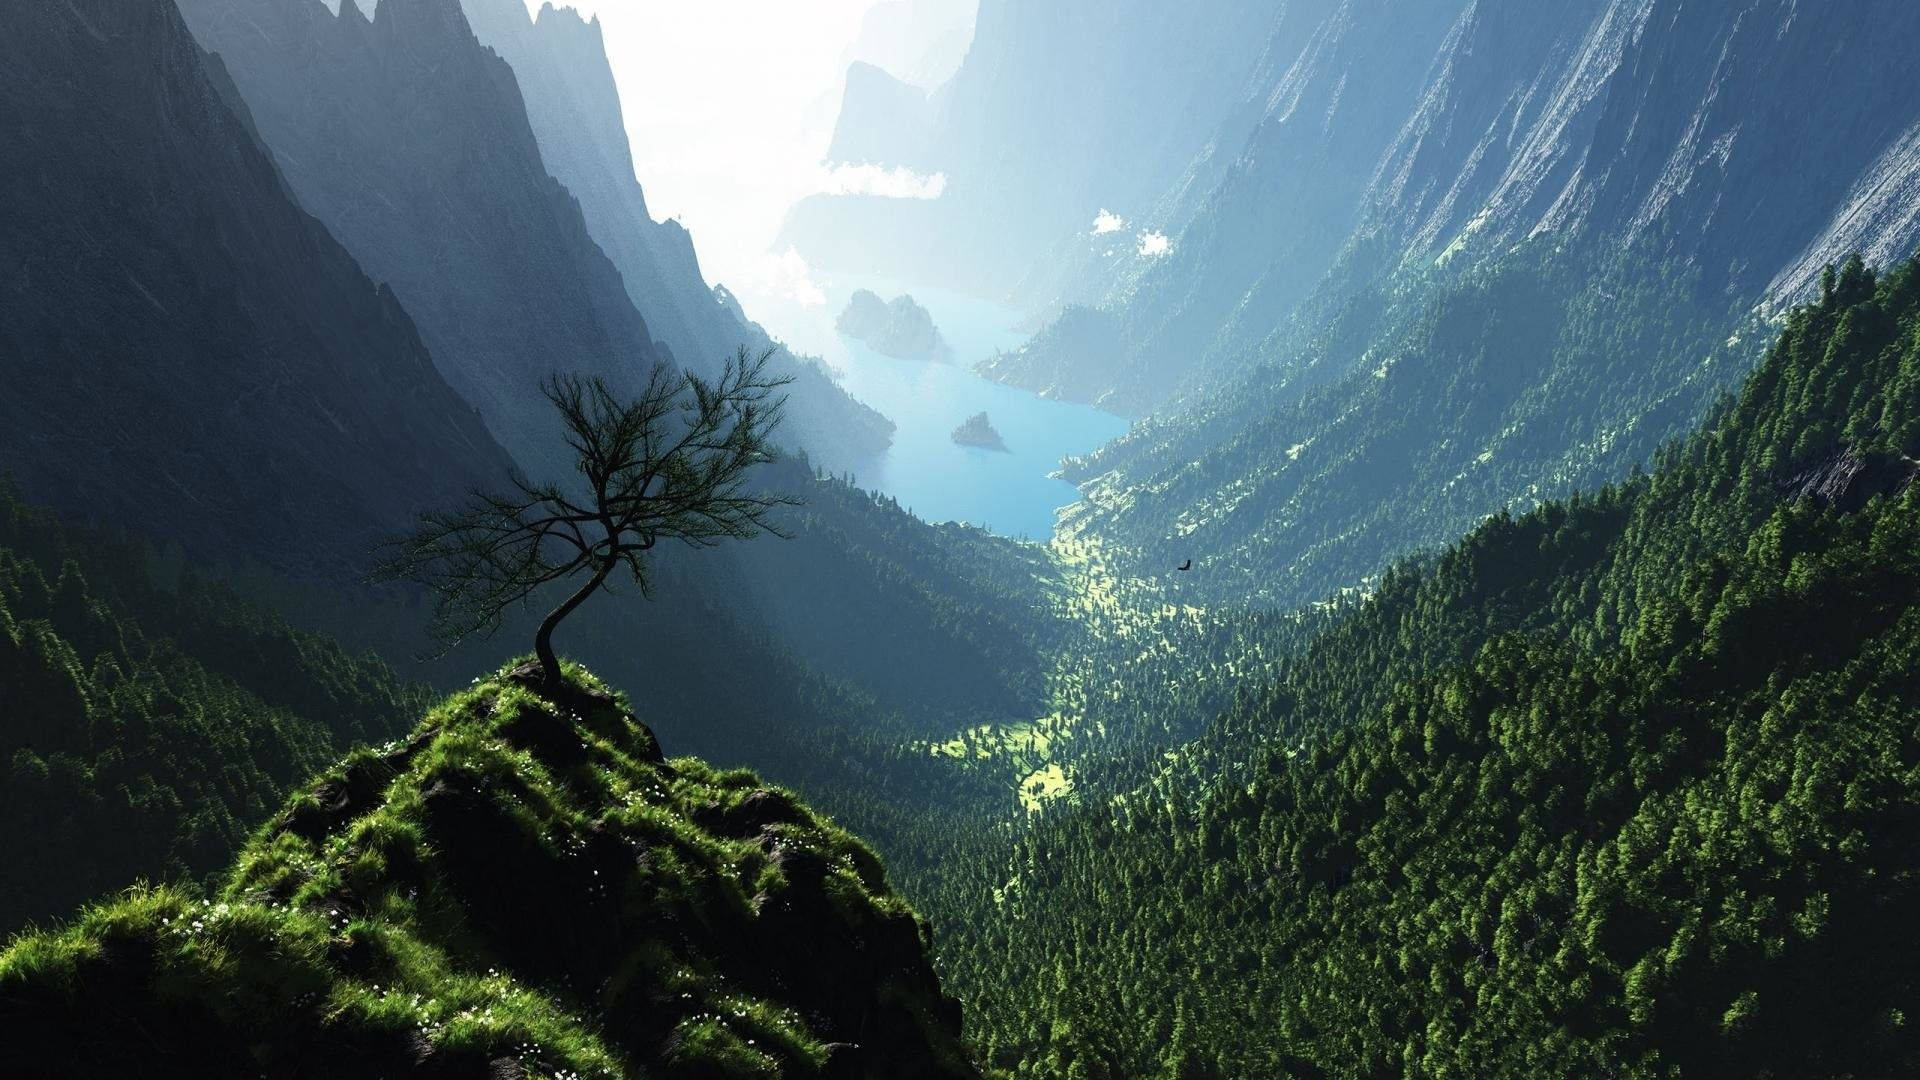 45 Free Beautiful Mountain Wallpapers For iPhone You Need See | Paisaje de  fantasía, Fotografia paisaje, Paisajes